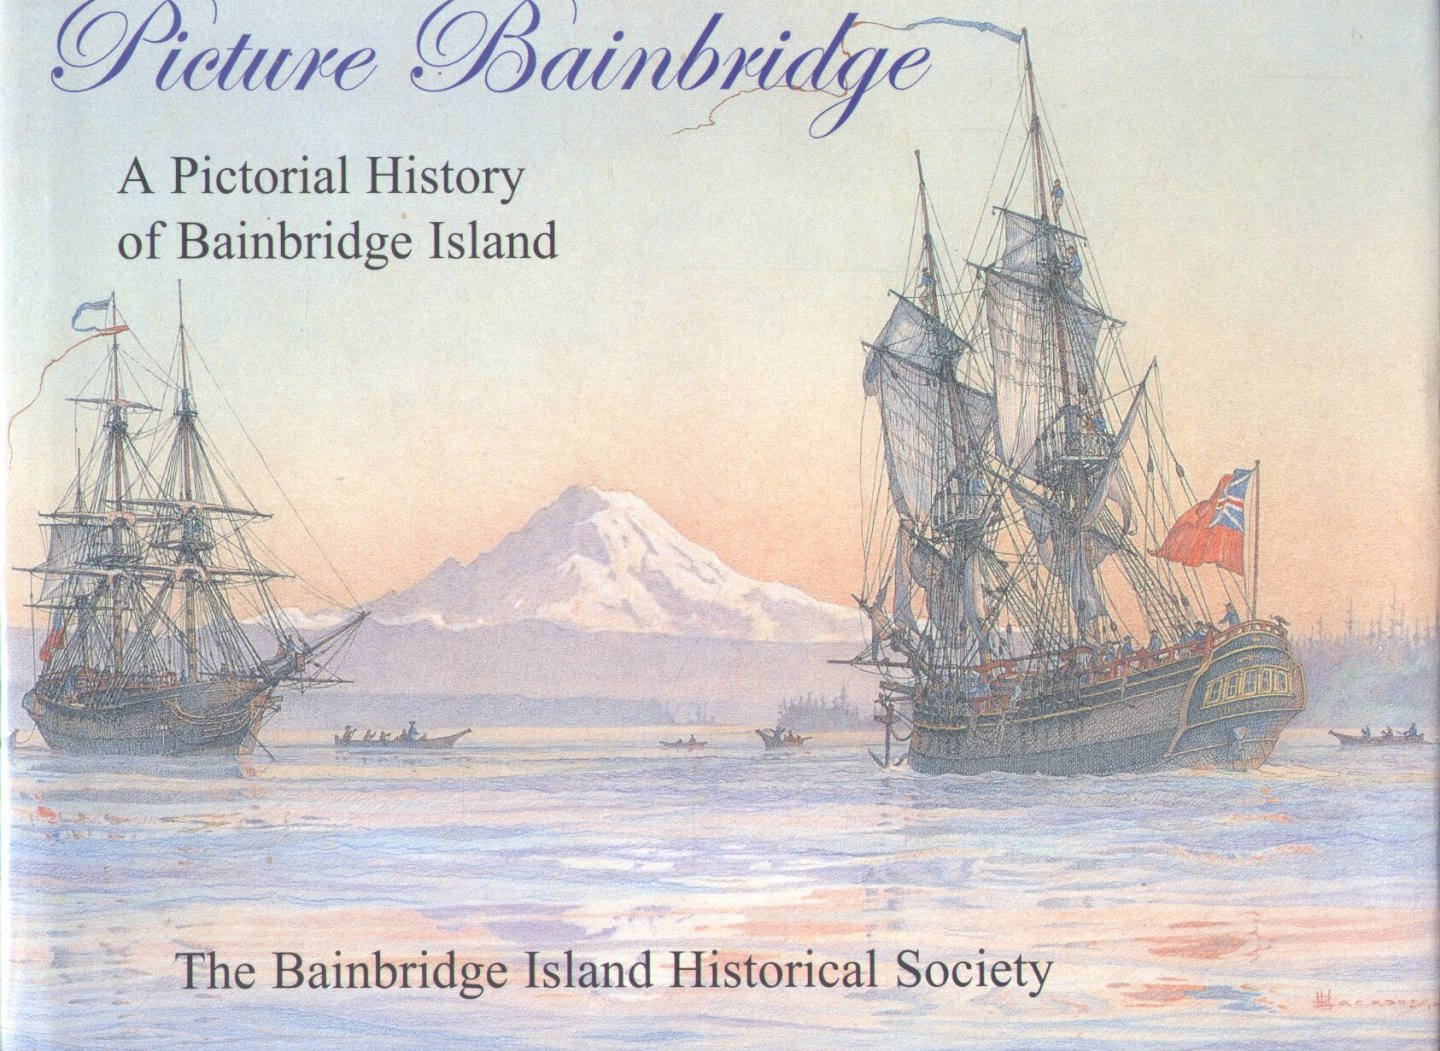 Swanson, Jack - Picture Bainbridge (A Pictorial History of Bainbridge Island - WA.)